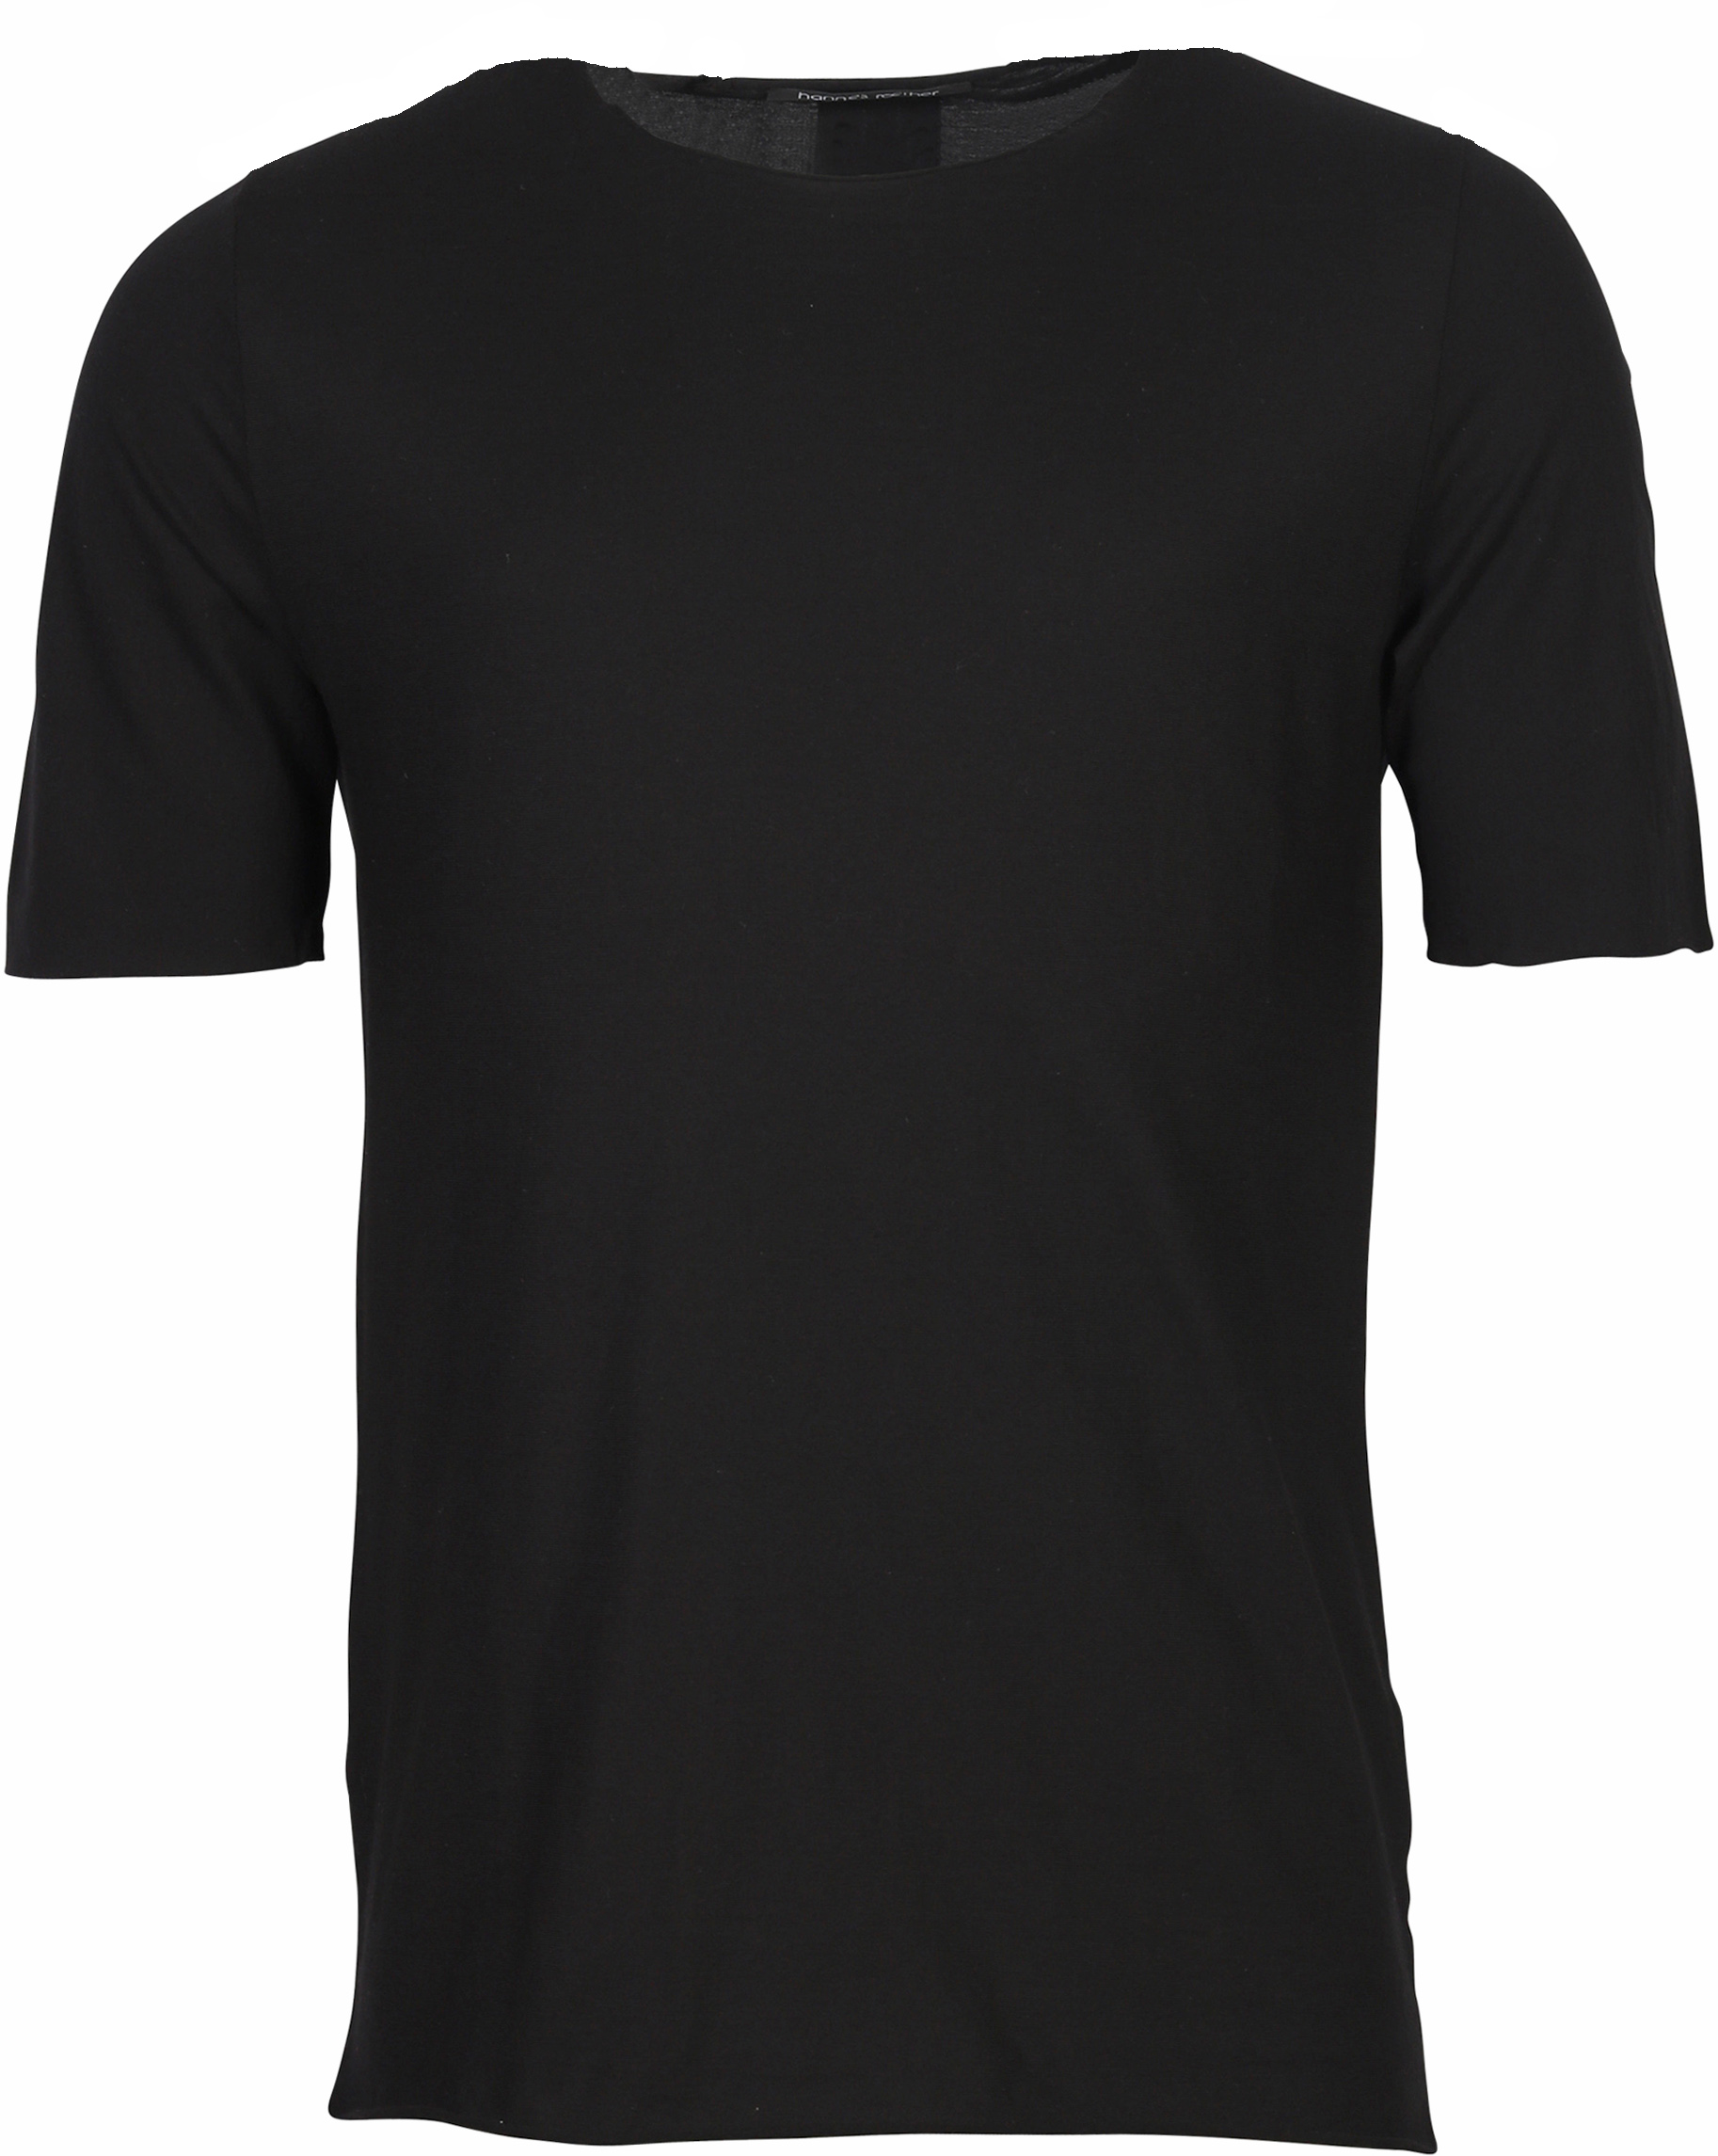 Hannes Roether T-Shirt Black M